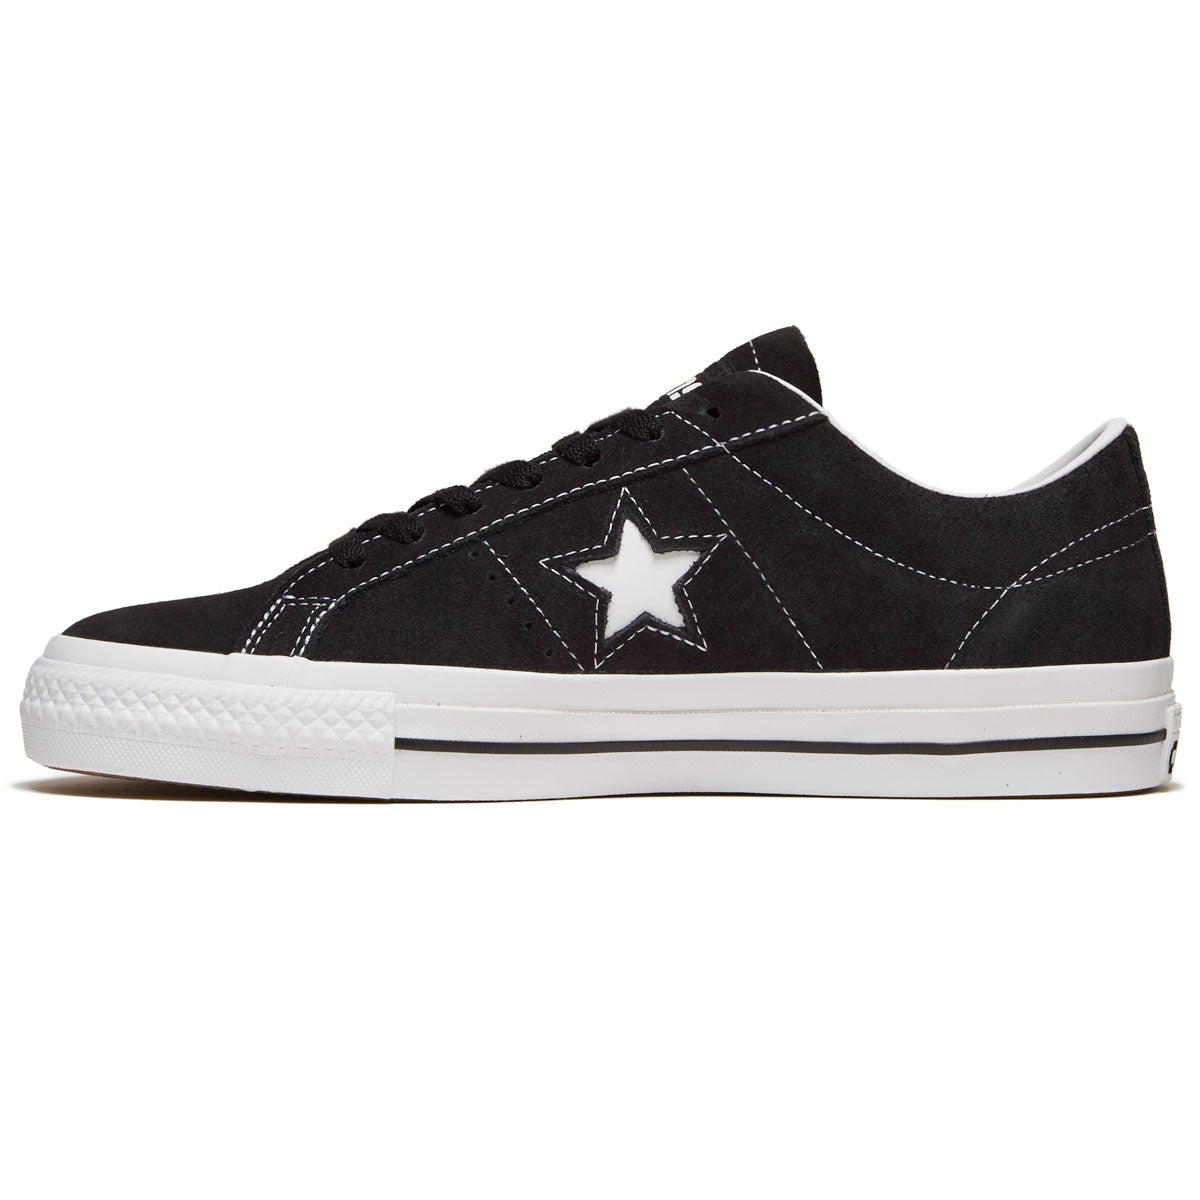 Converse One Star Pro Ox Shoes - Black/Black/White